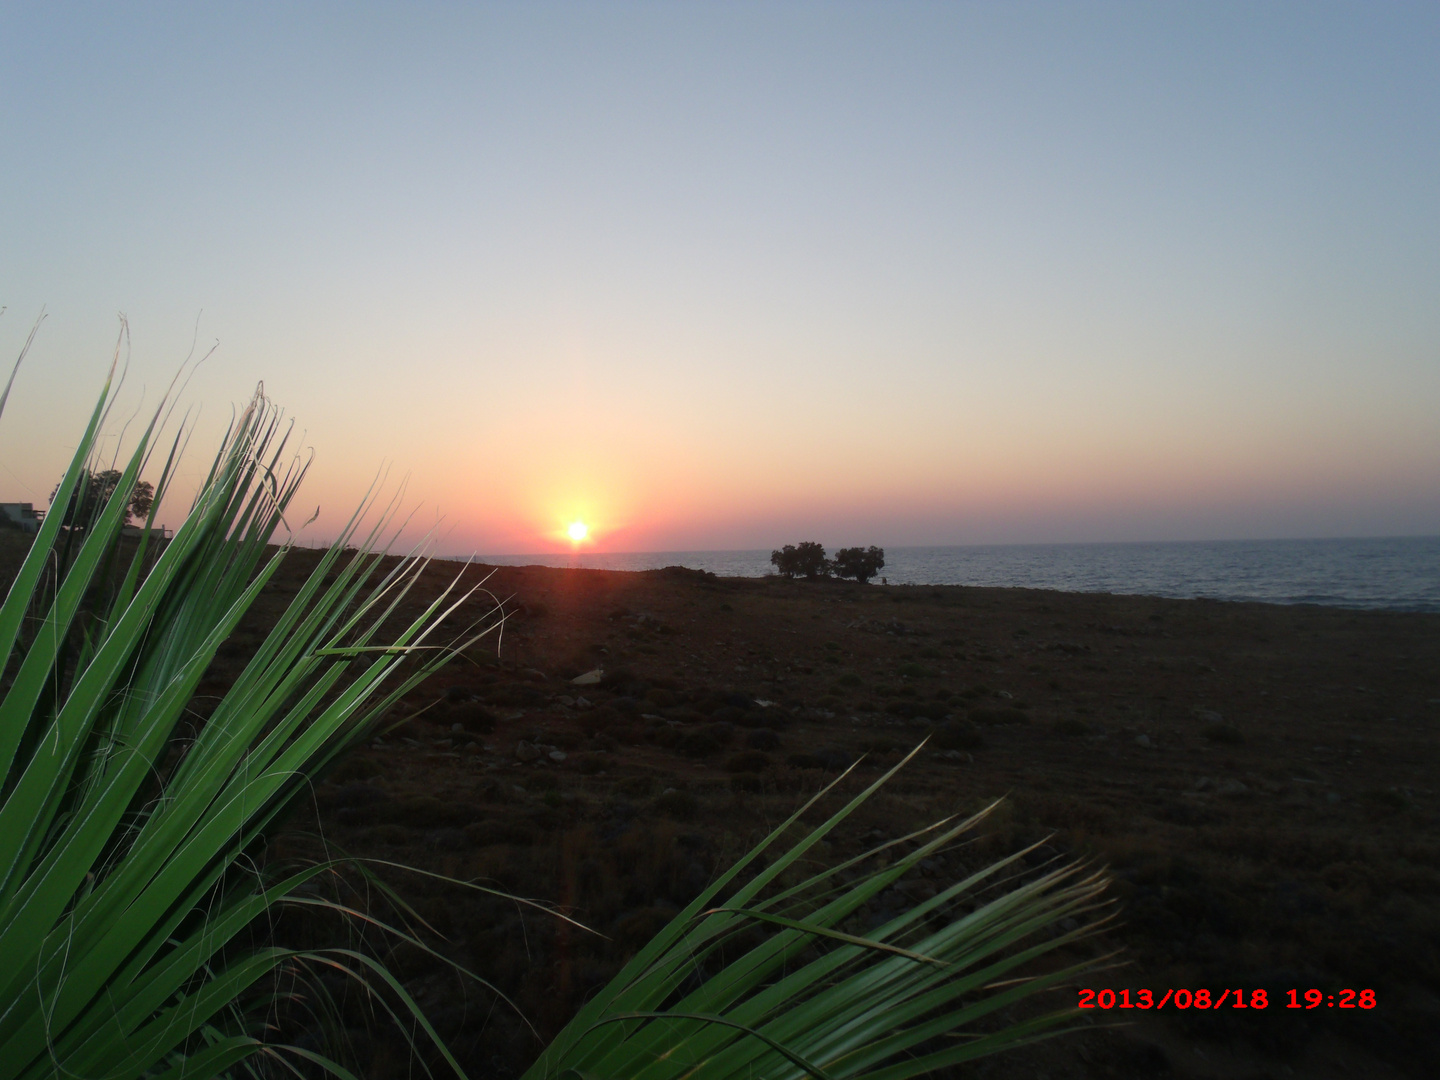 Sonnenuntergang in Kreta -Panormo